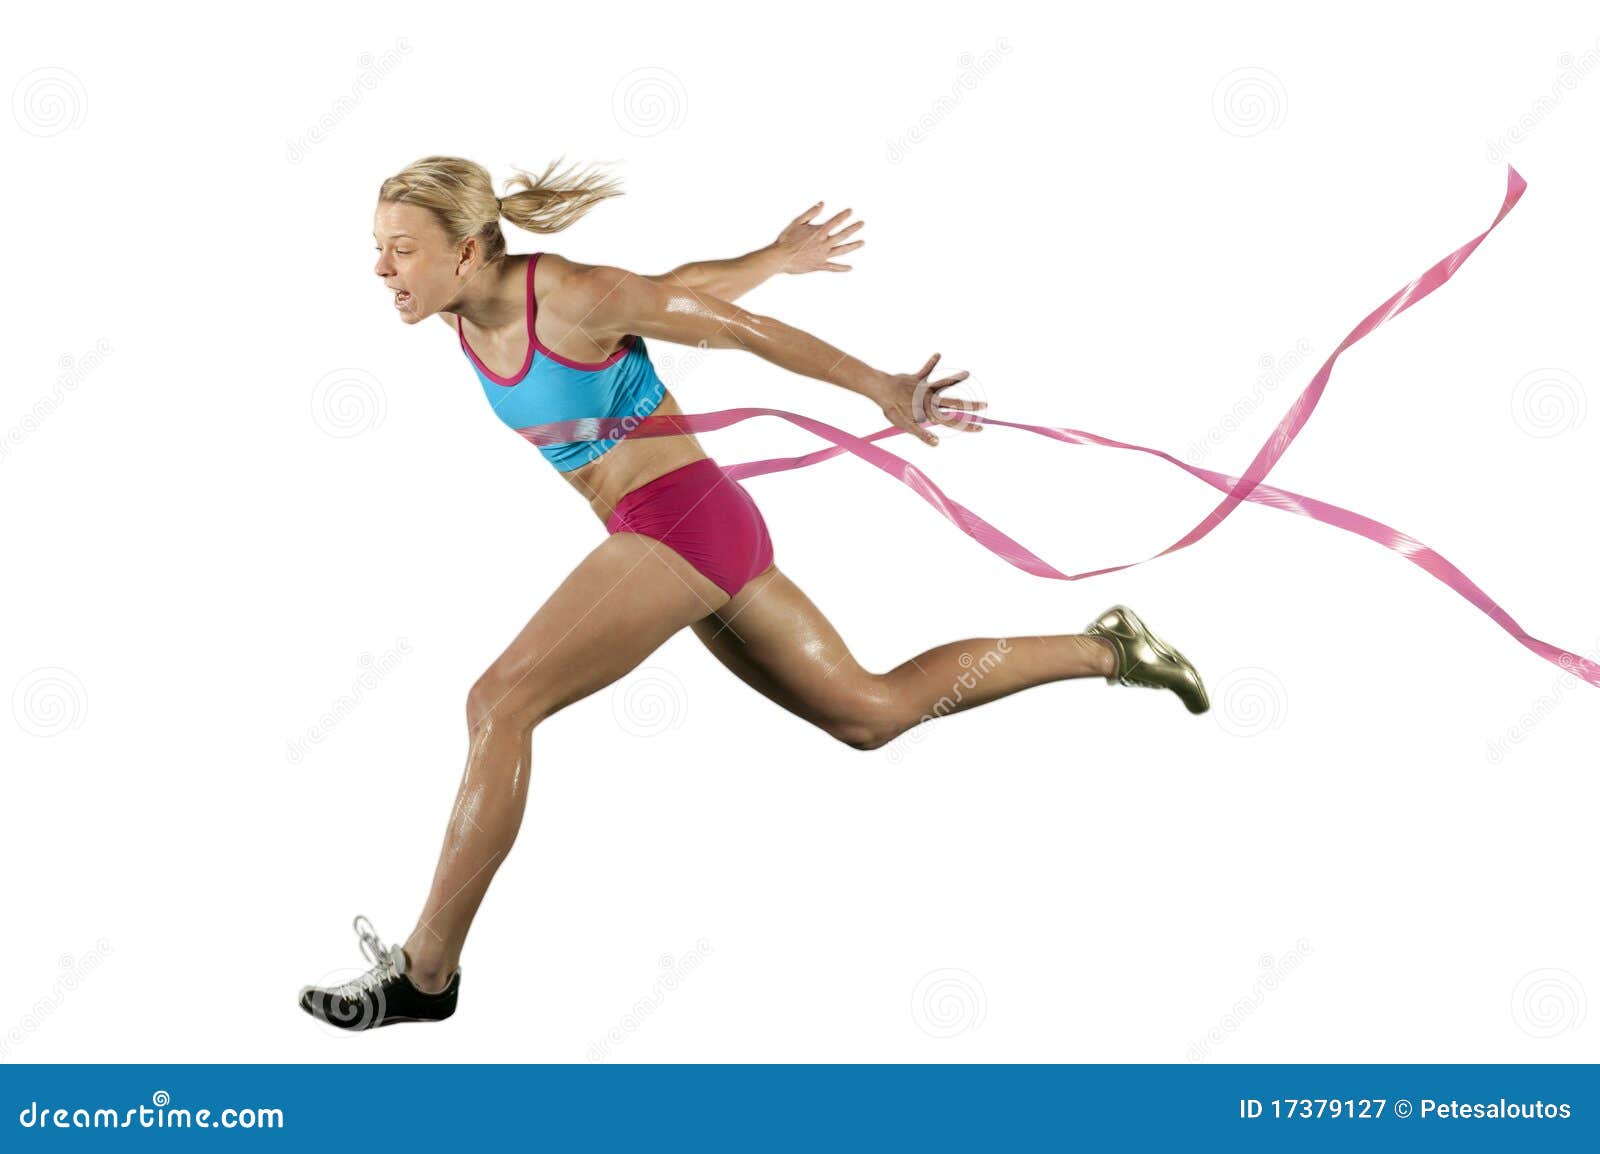 sprinter crossing the finish line